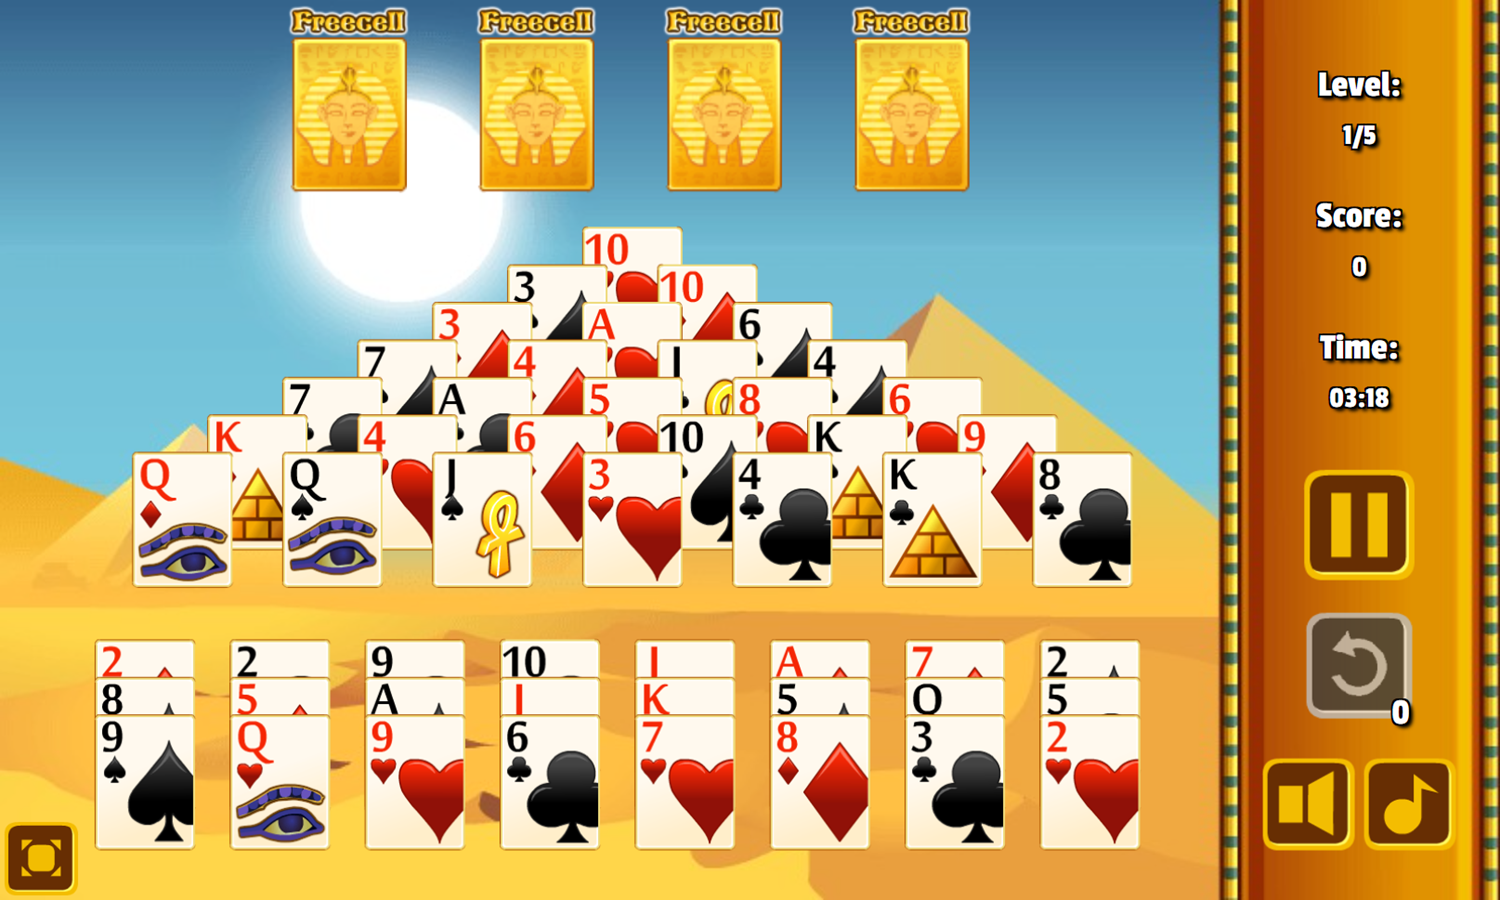 Freecell Giza Solitaire Game Start Screenshot.